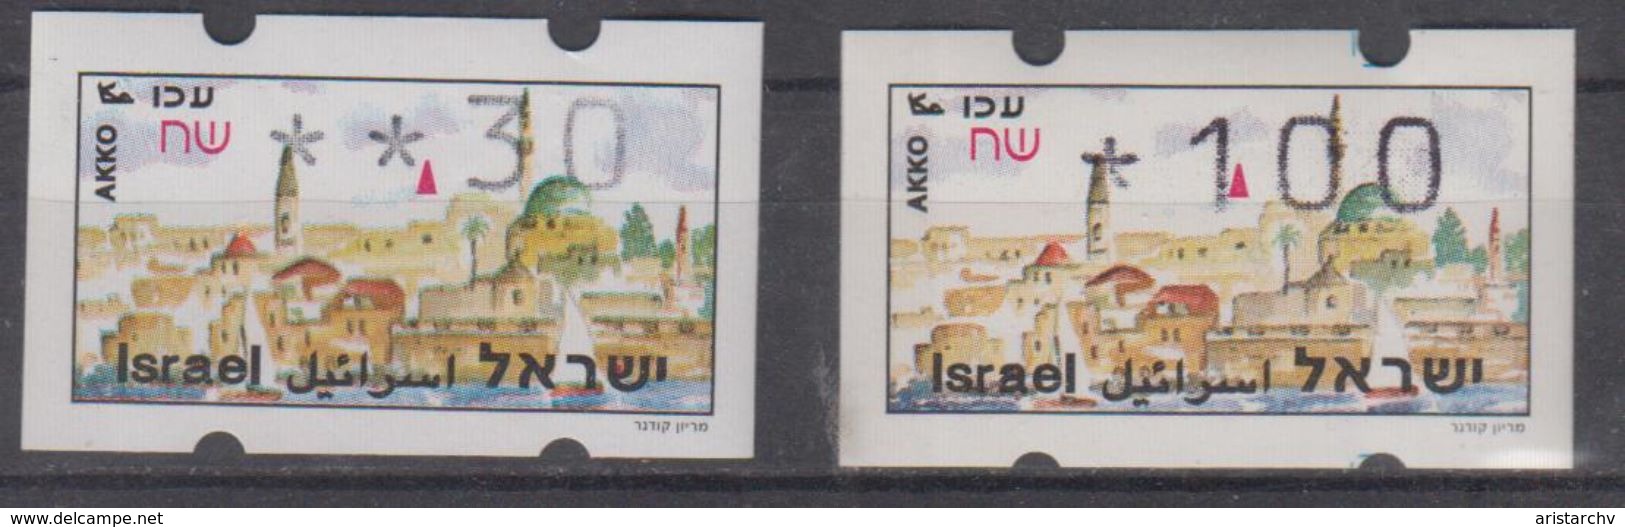 ISRAEL 1988 SIMA ATM AKKO 0.30 1 SHEKELS - Franking Labels